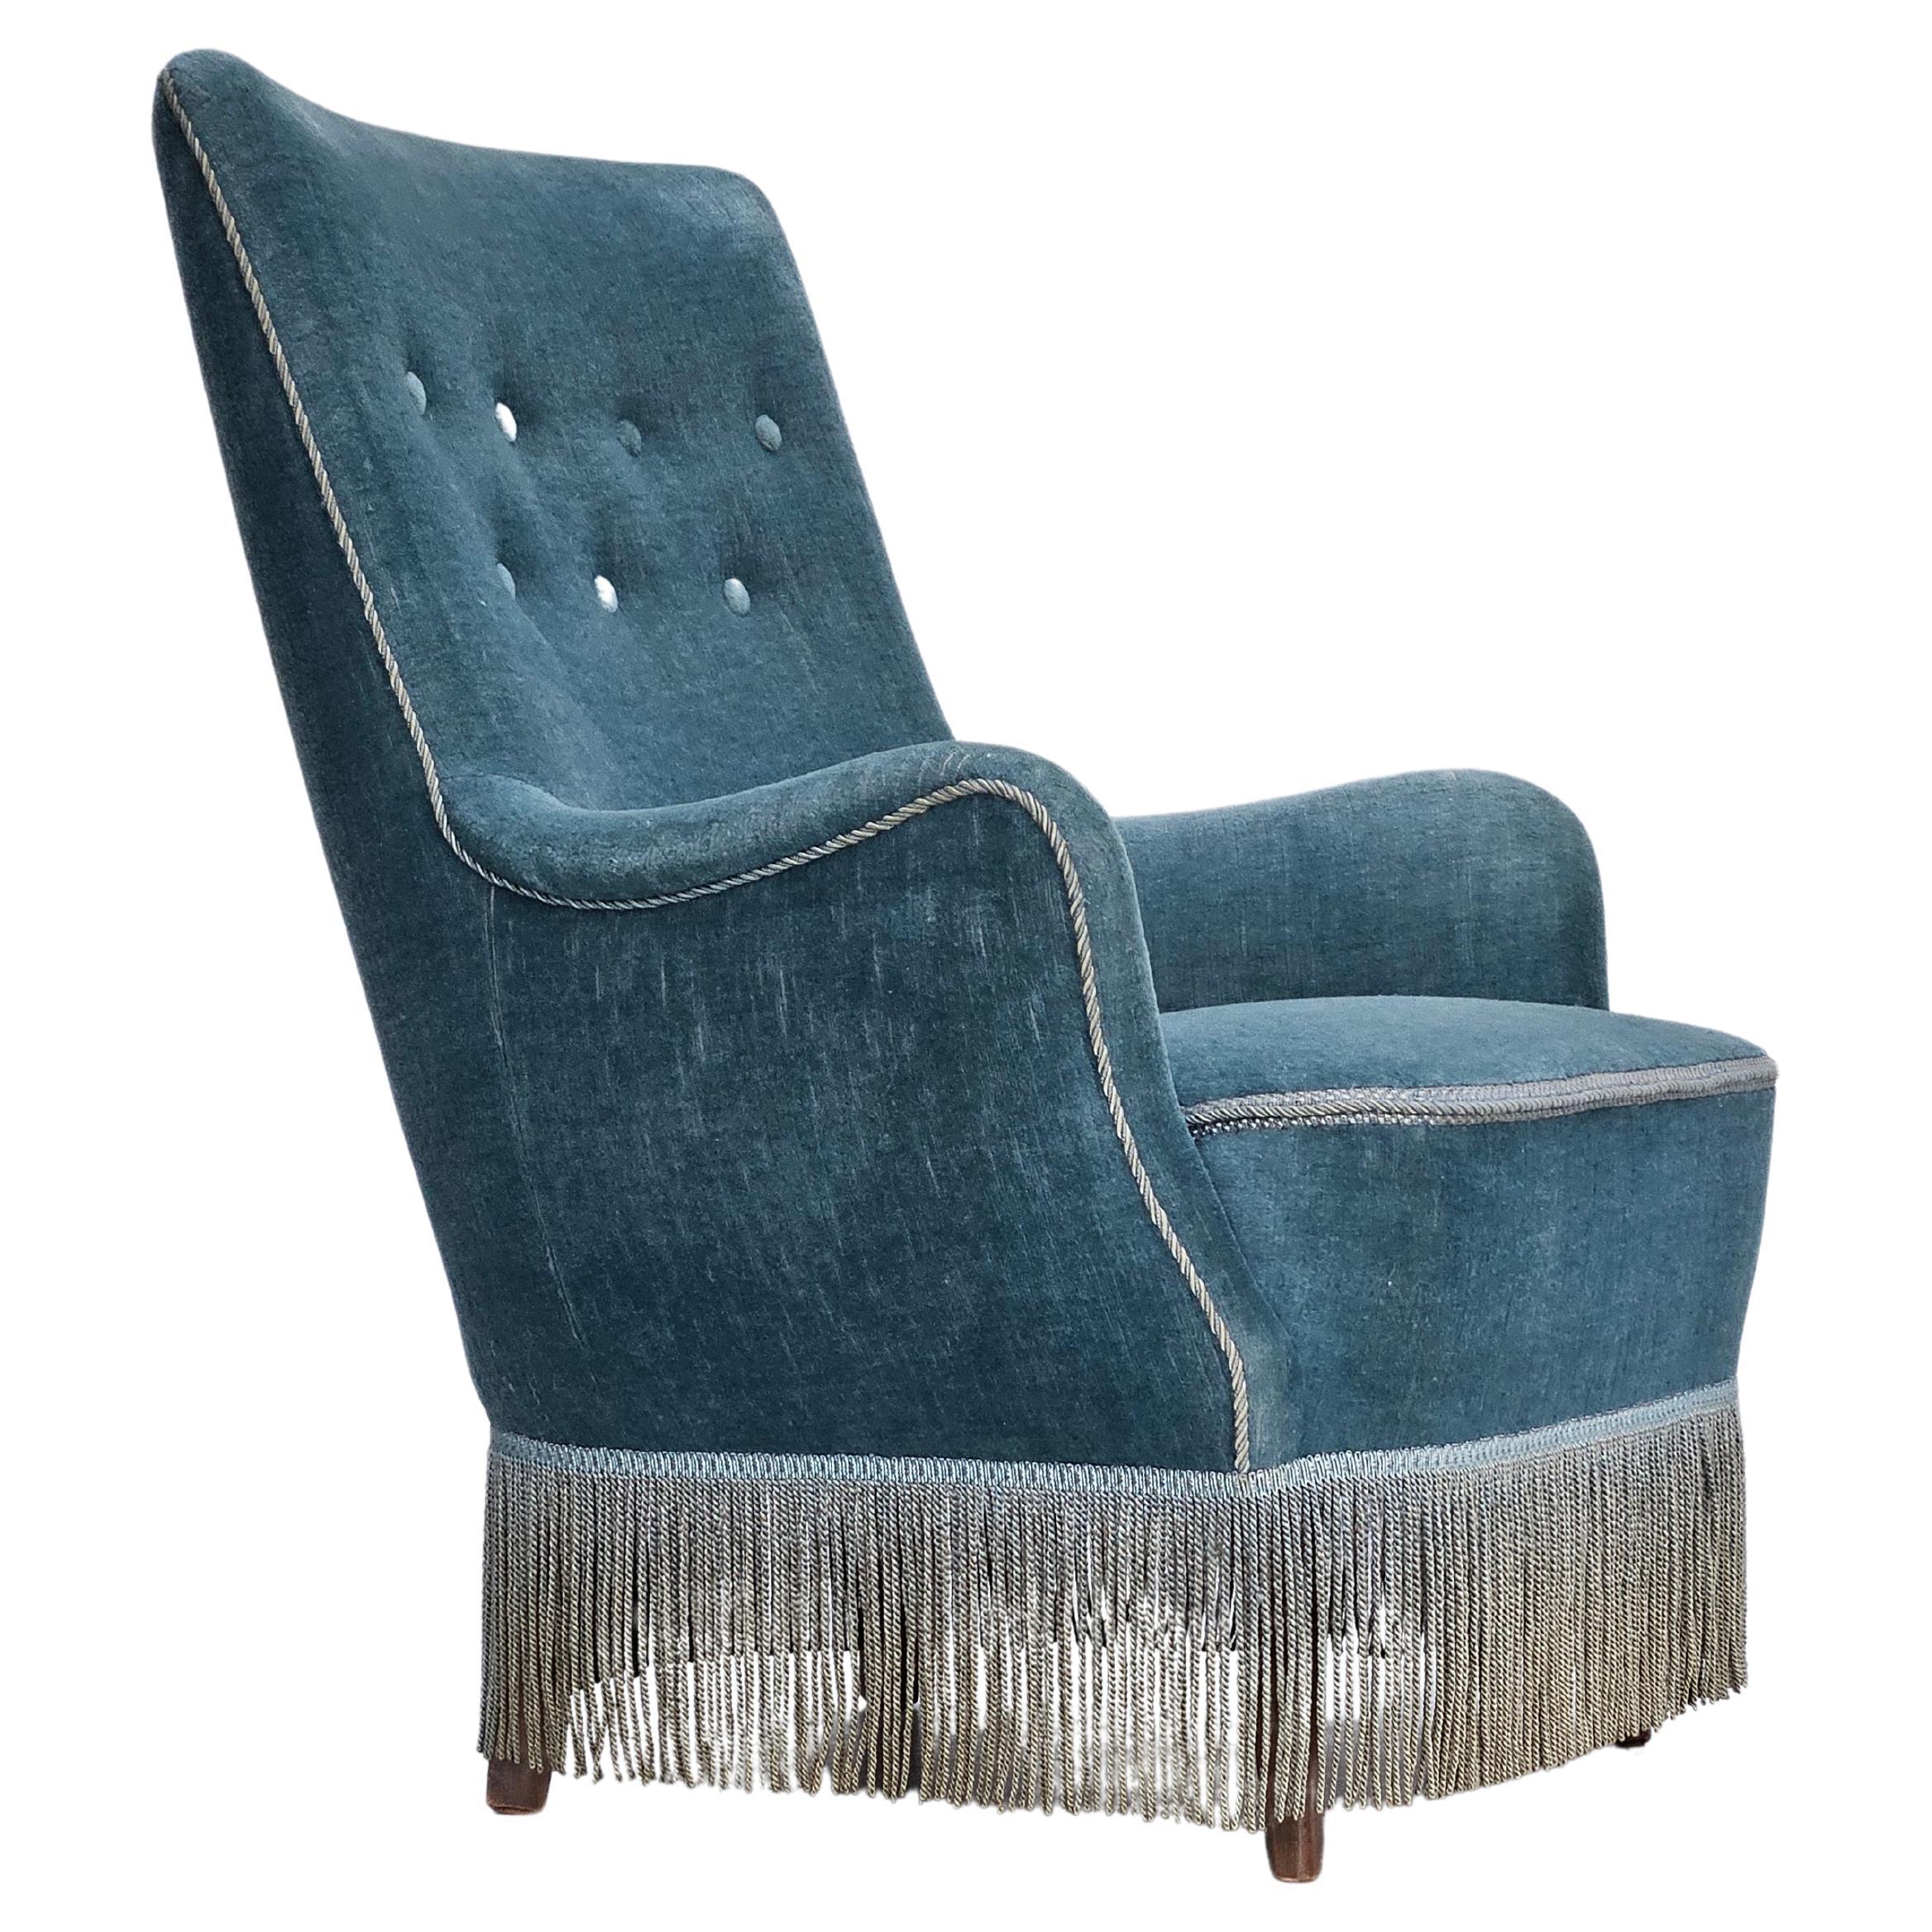 1960s, Danish armchair, original upholstery, light blue velour, good condition.